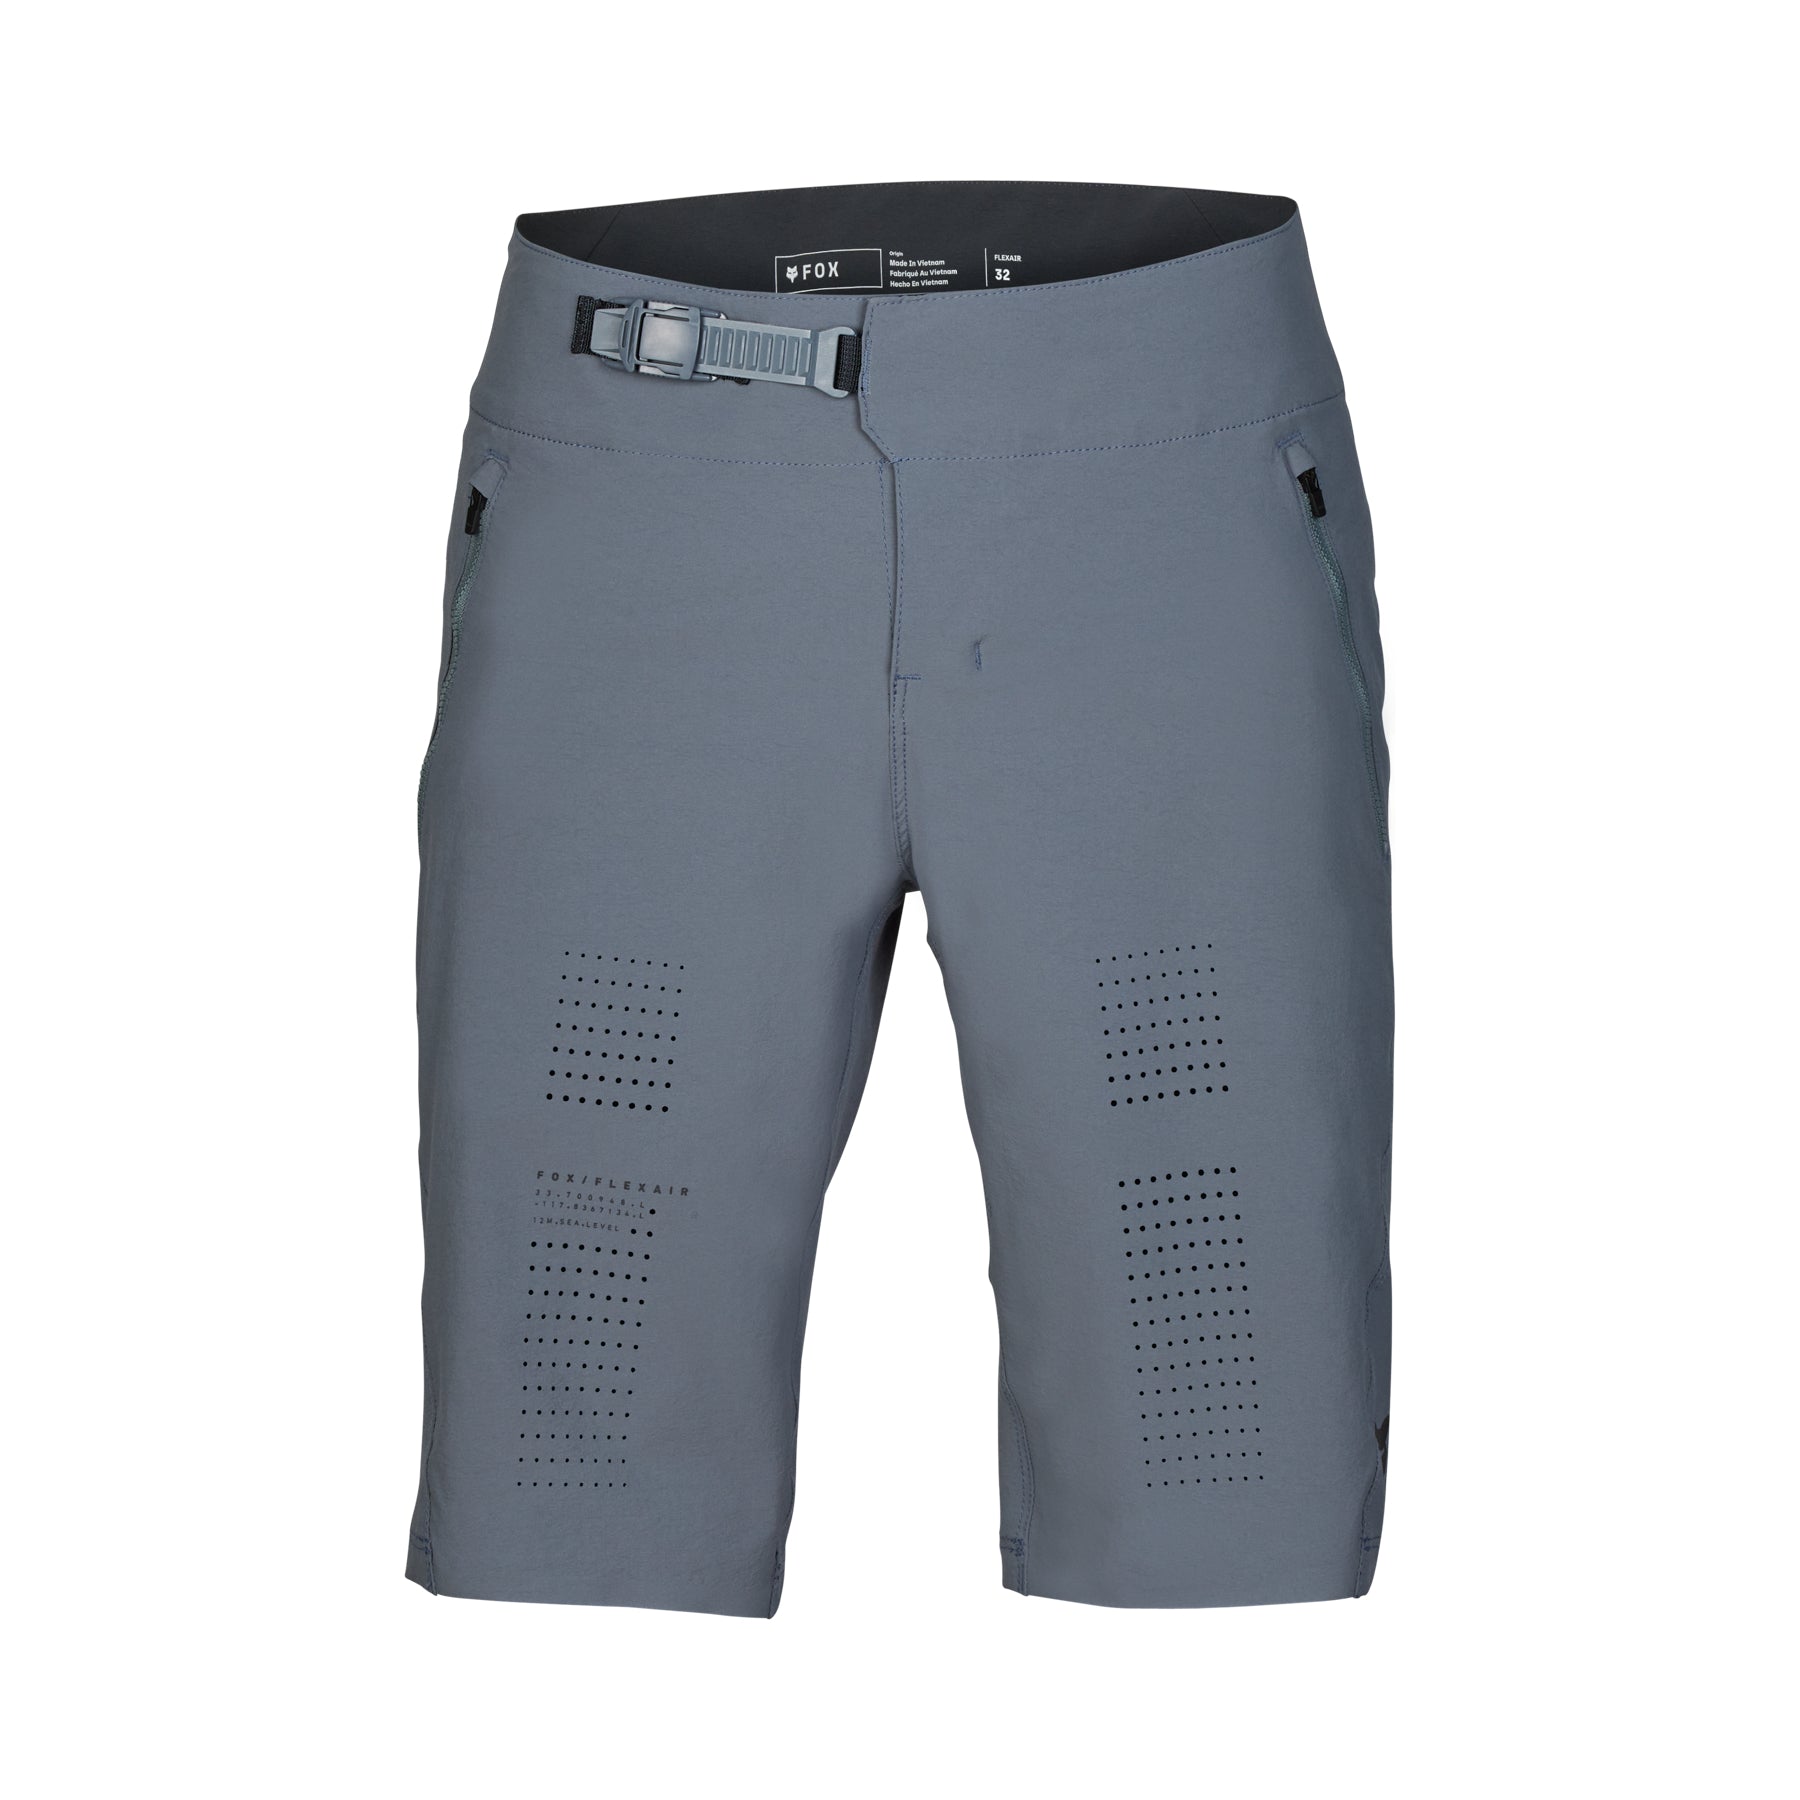 Fox Flexair Shorts With Liner - L-34 - Graphite - Image 1